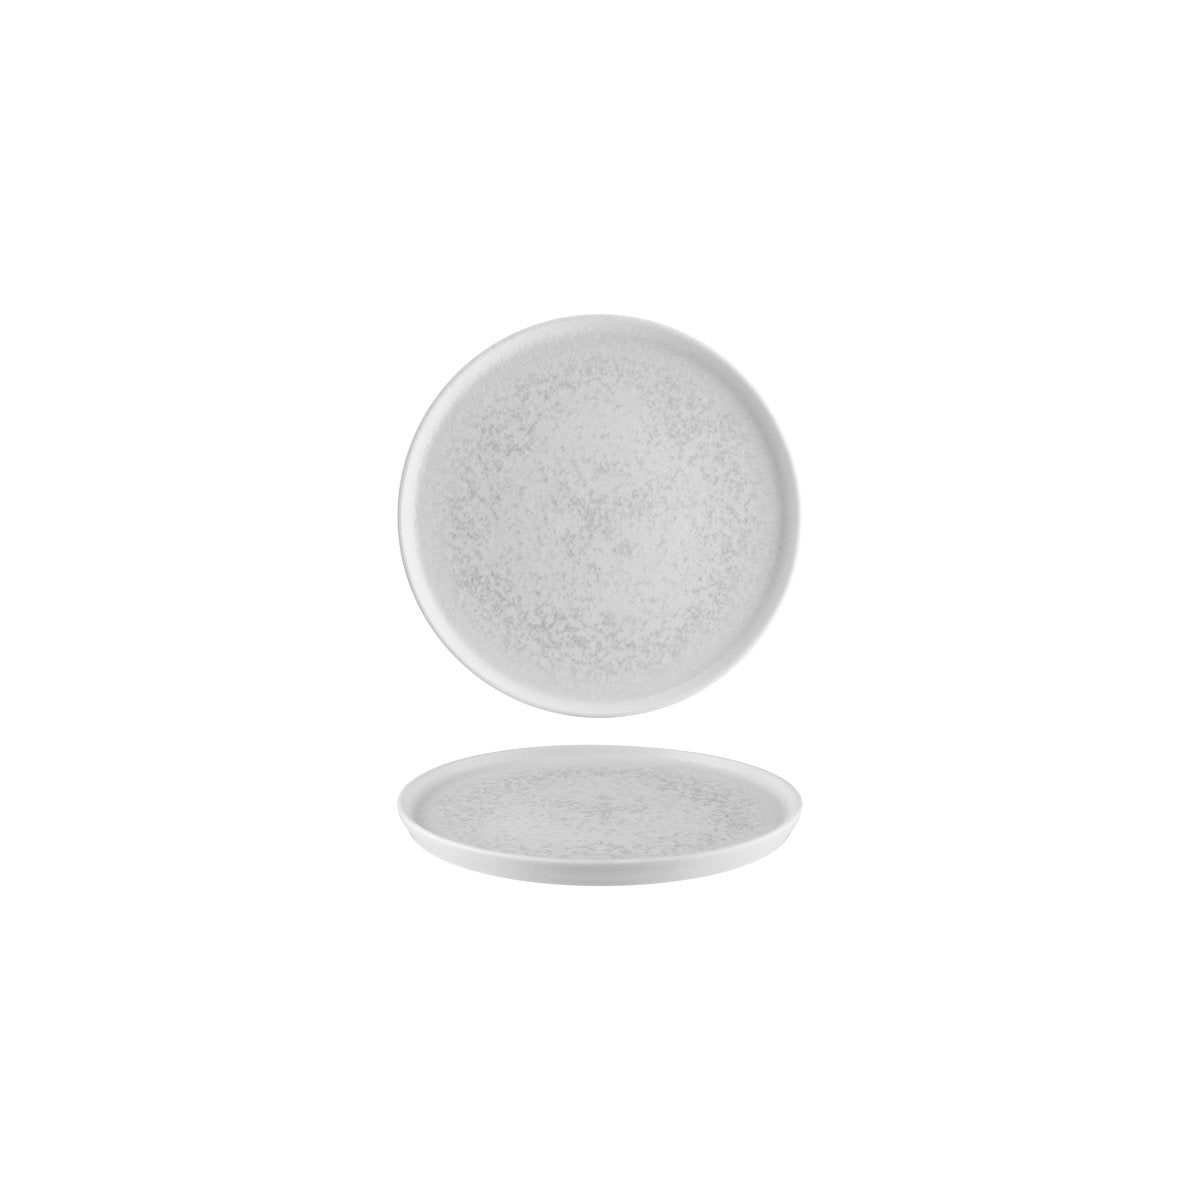 130205 Bonna Lunar White Round Plate 160x15mm Tomkin Australia Hospitality Supplies